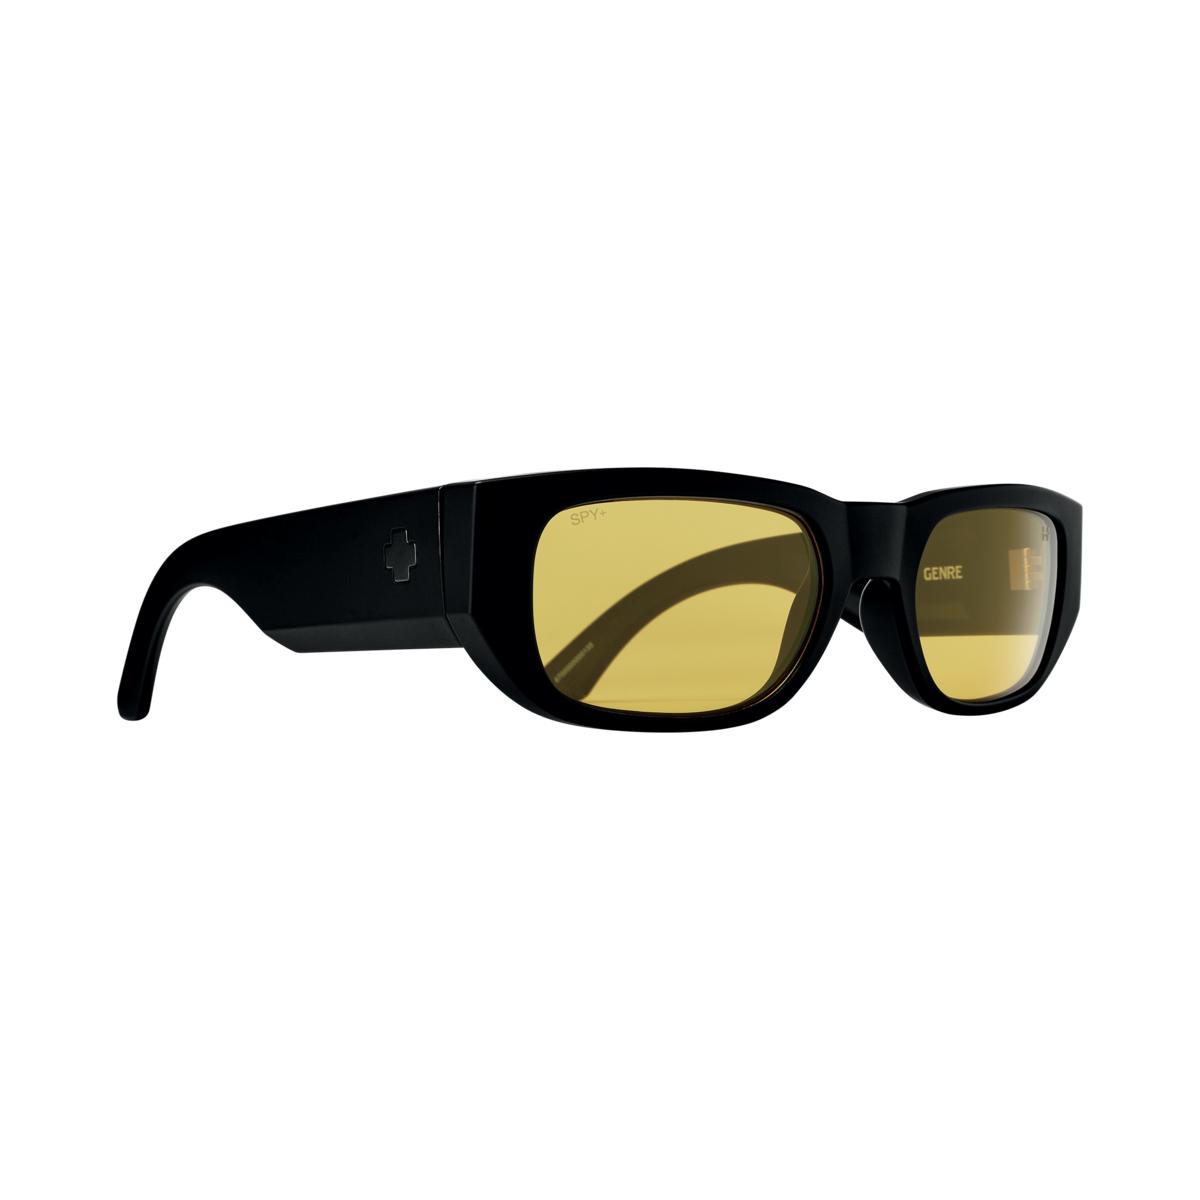 Spy Optic Genre Sunglasses